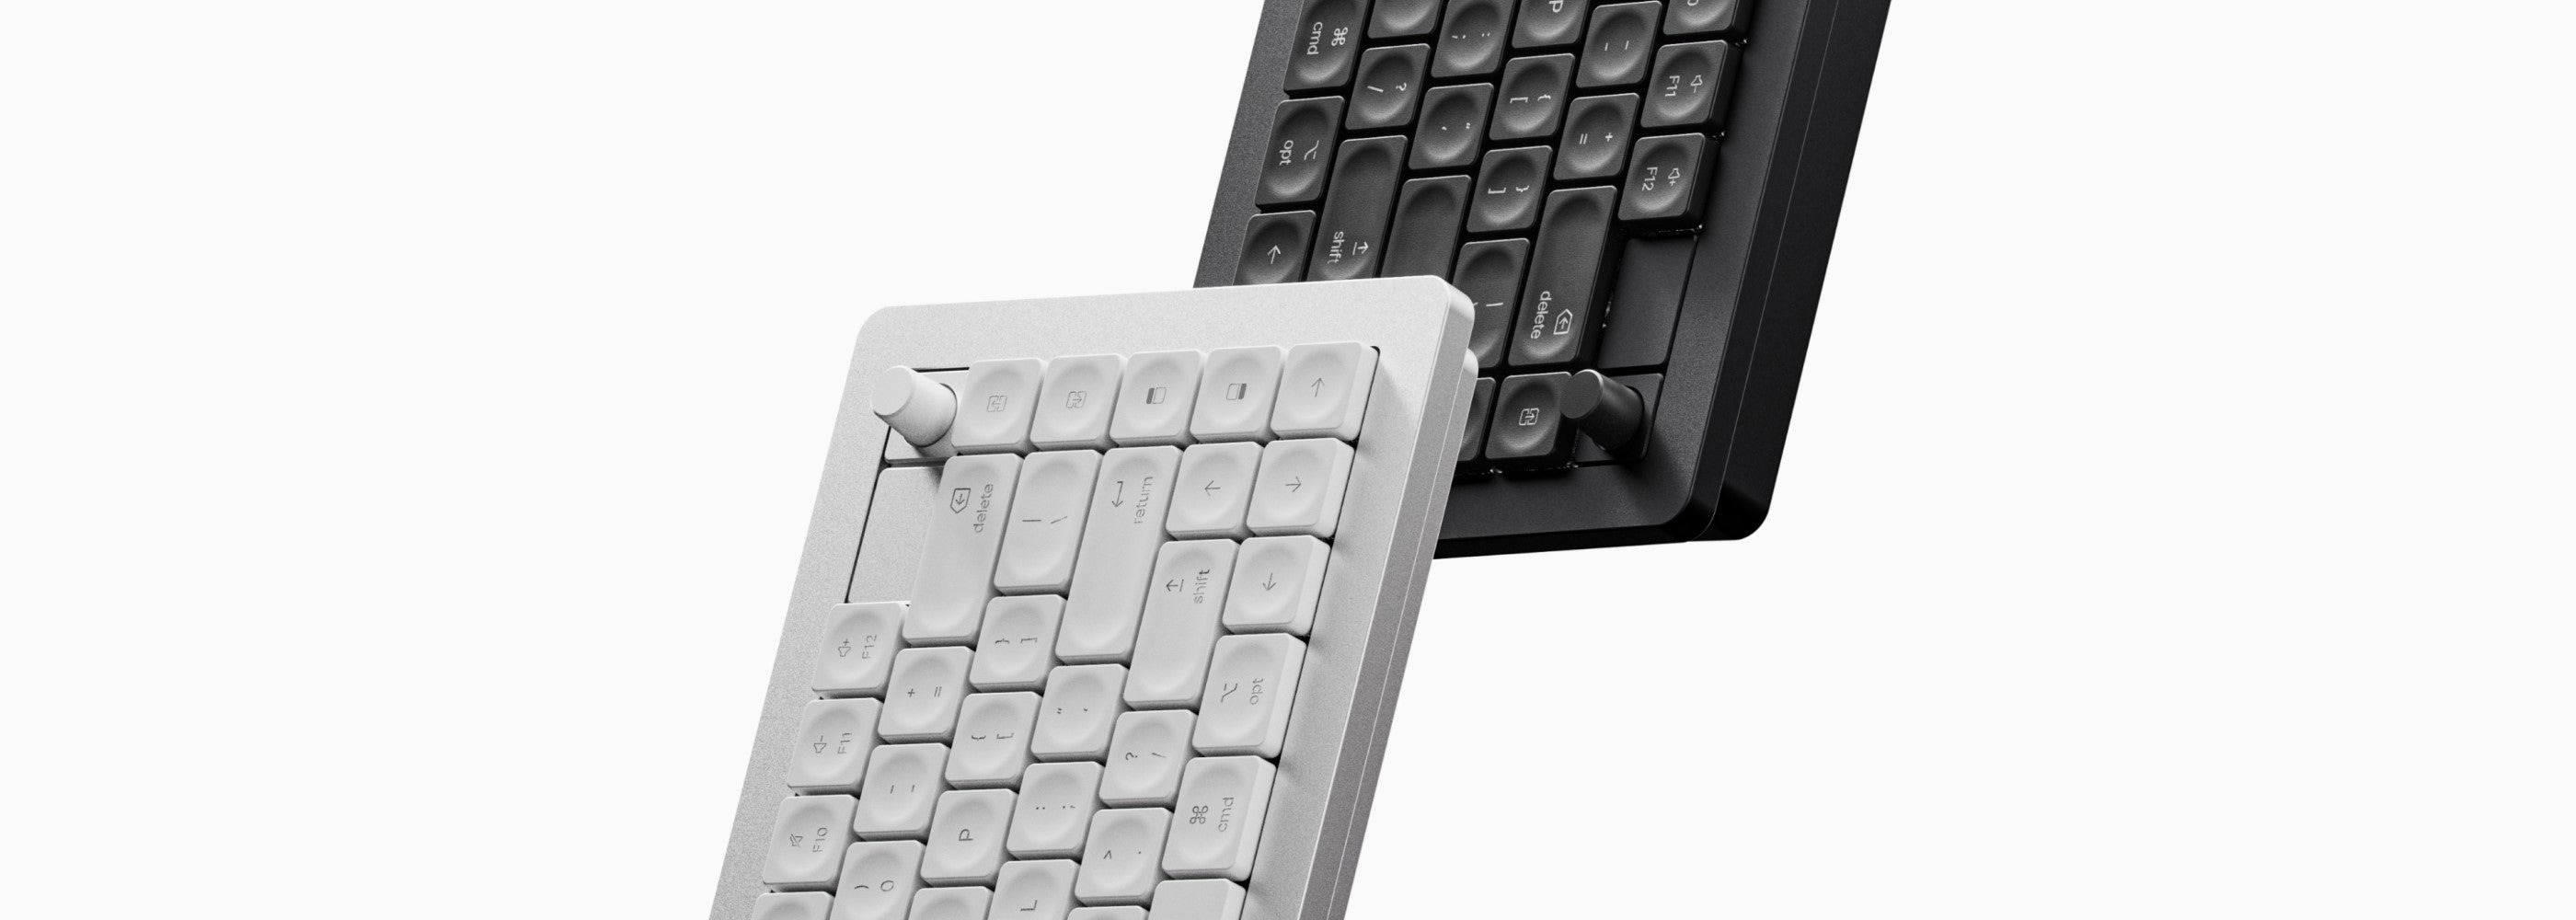 In Stock) ePBT Solaria – proto[Typist] Keyboards